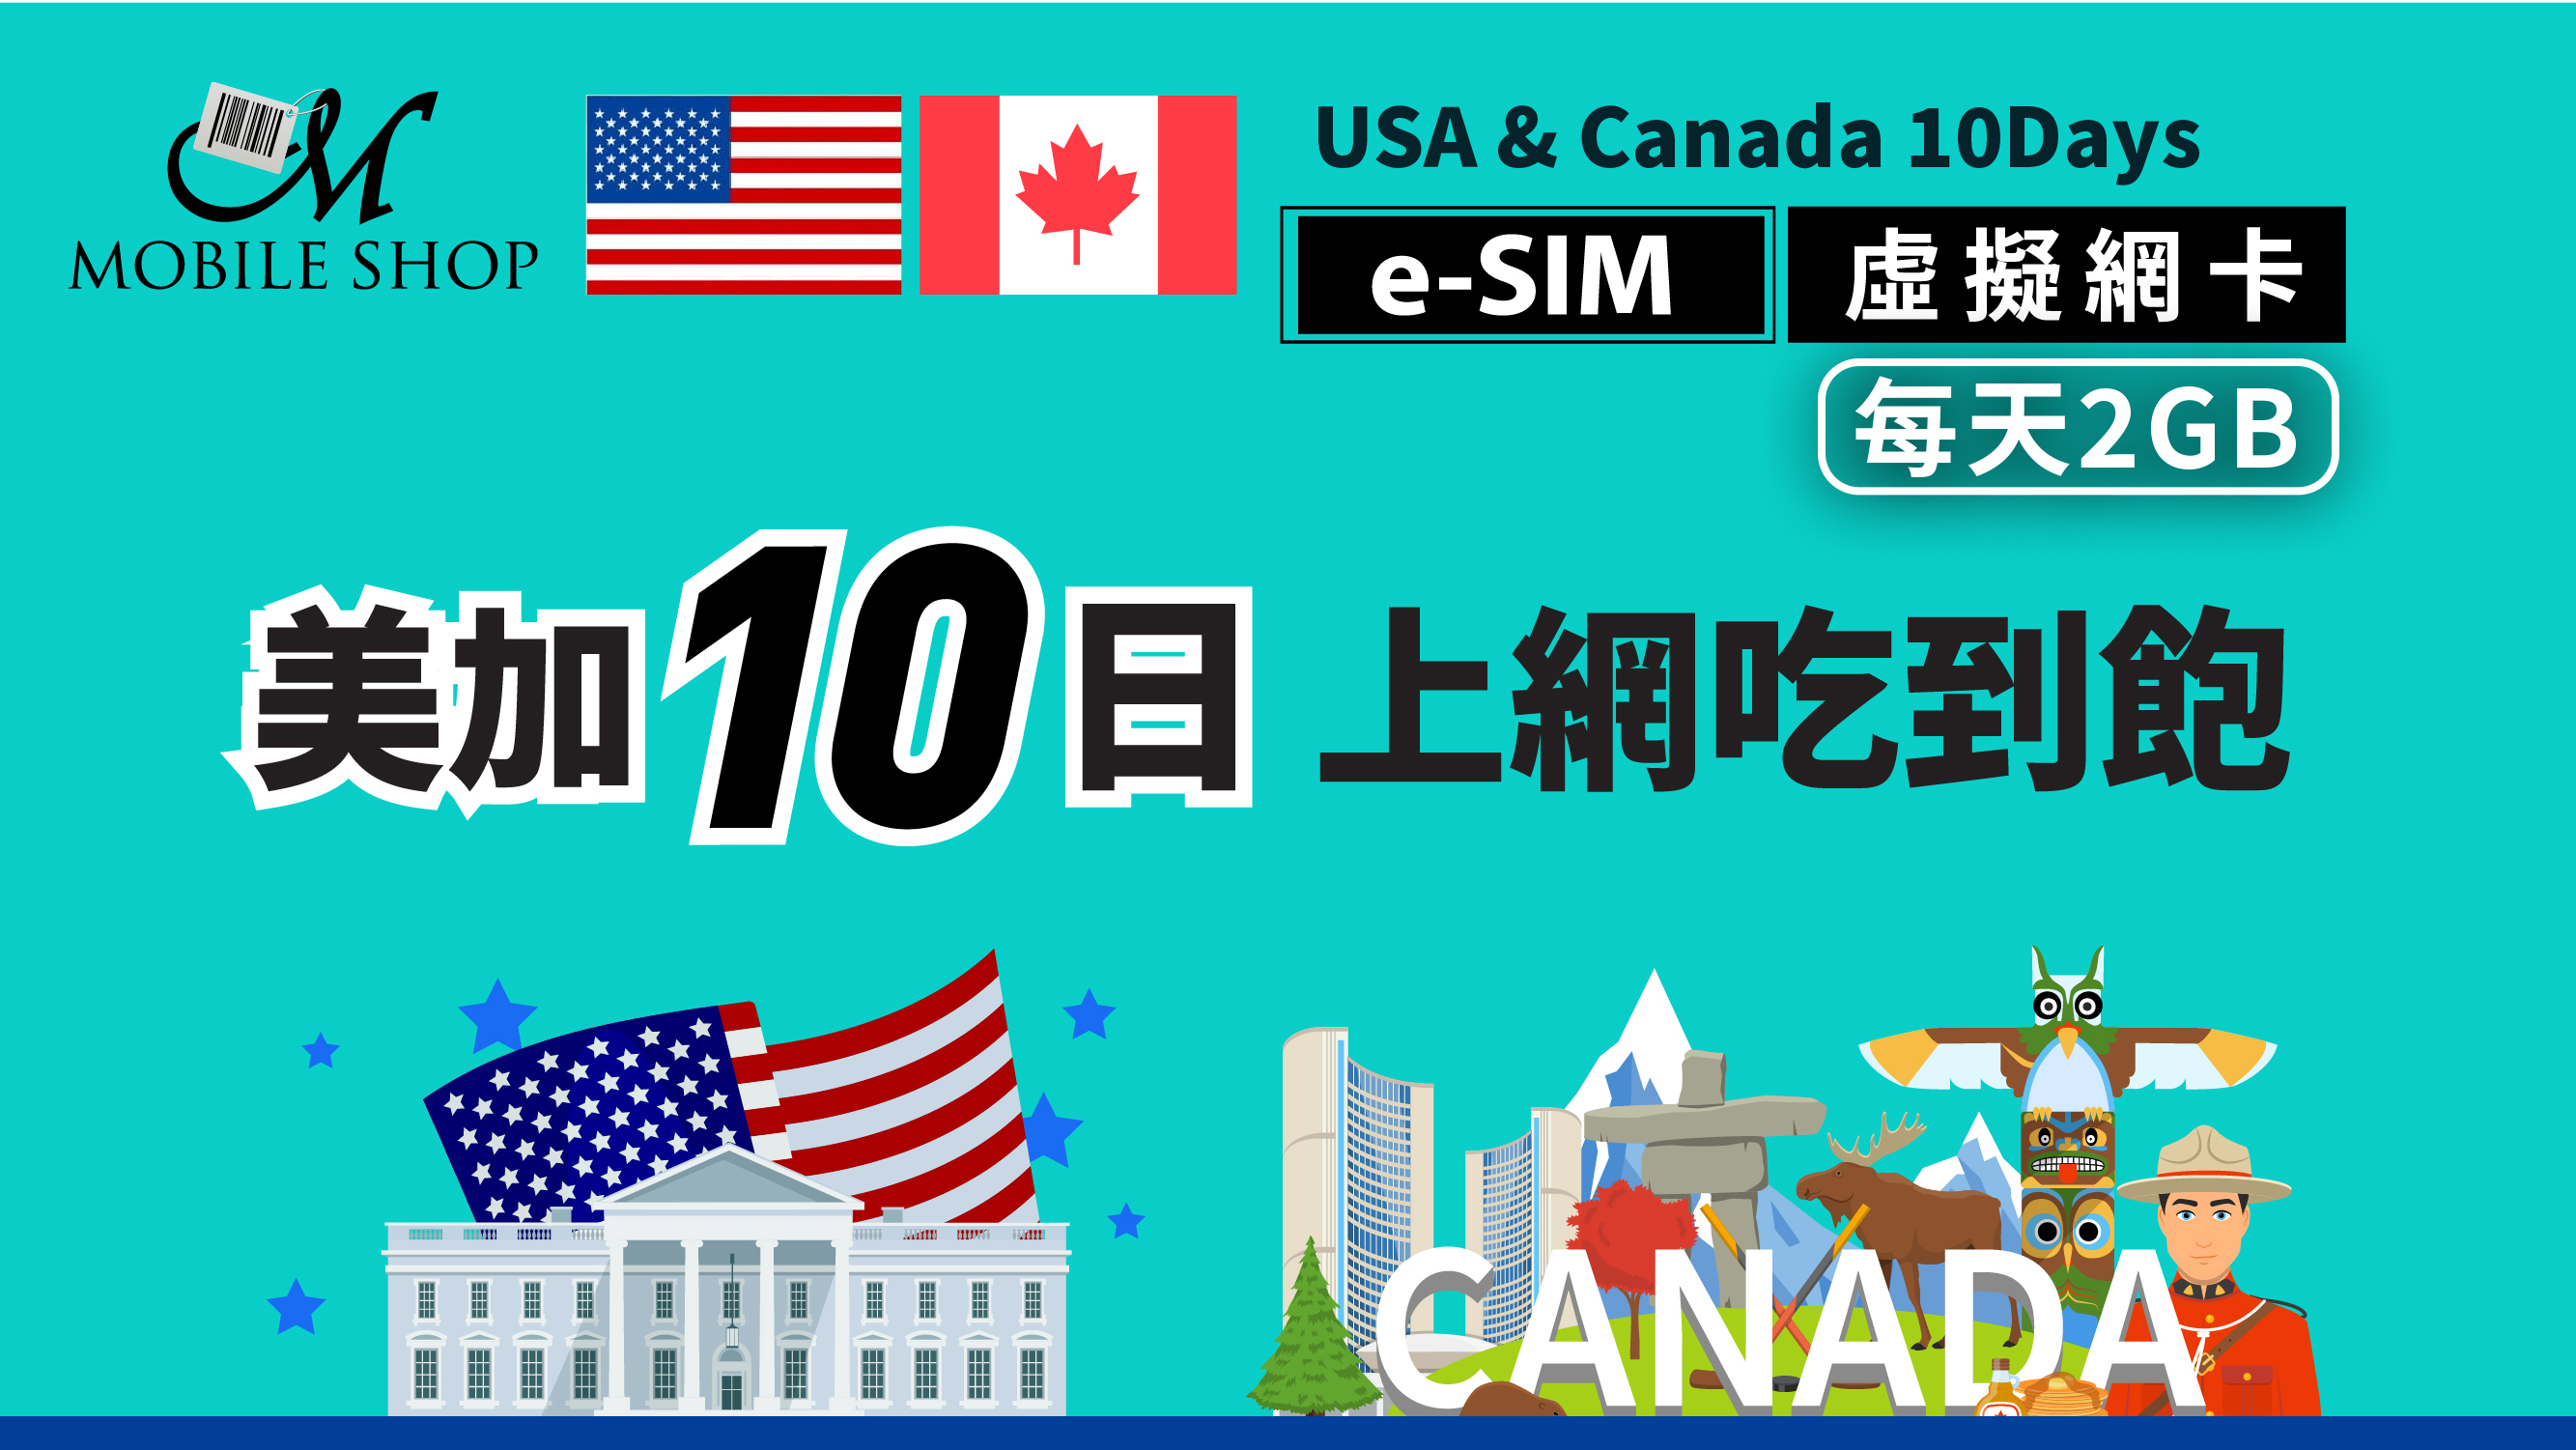 e-SIM_U.S./Canada 10 days/2GB per day unlimited data